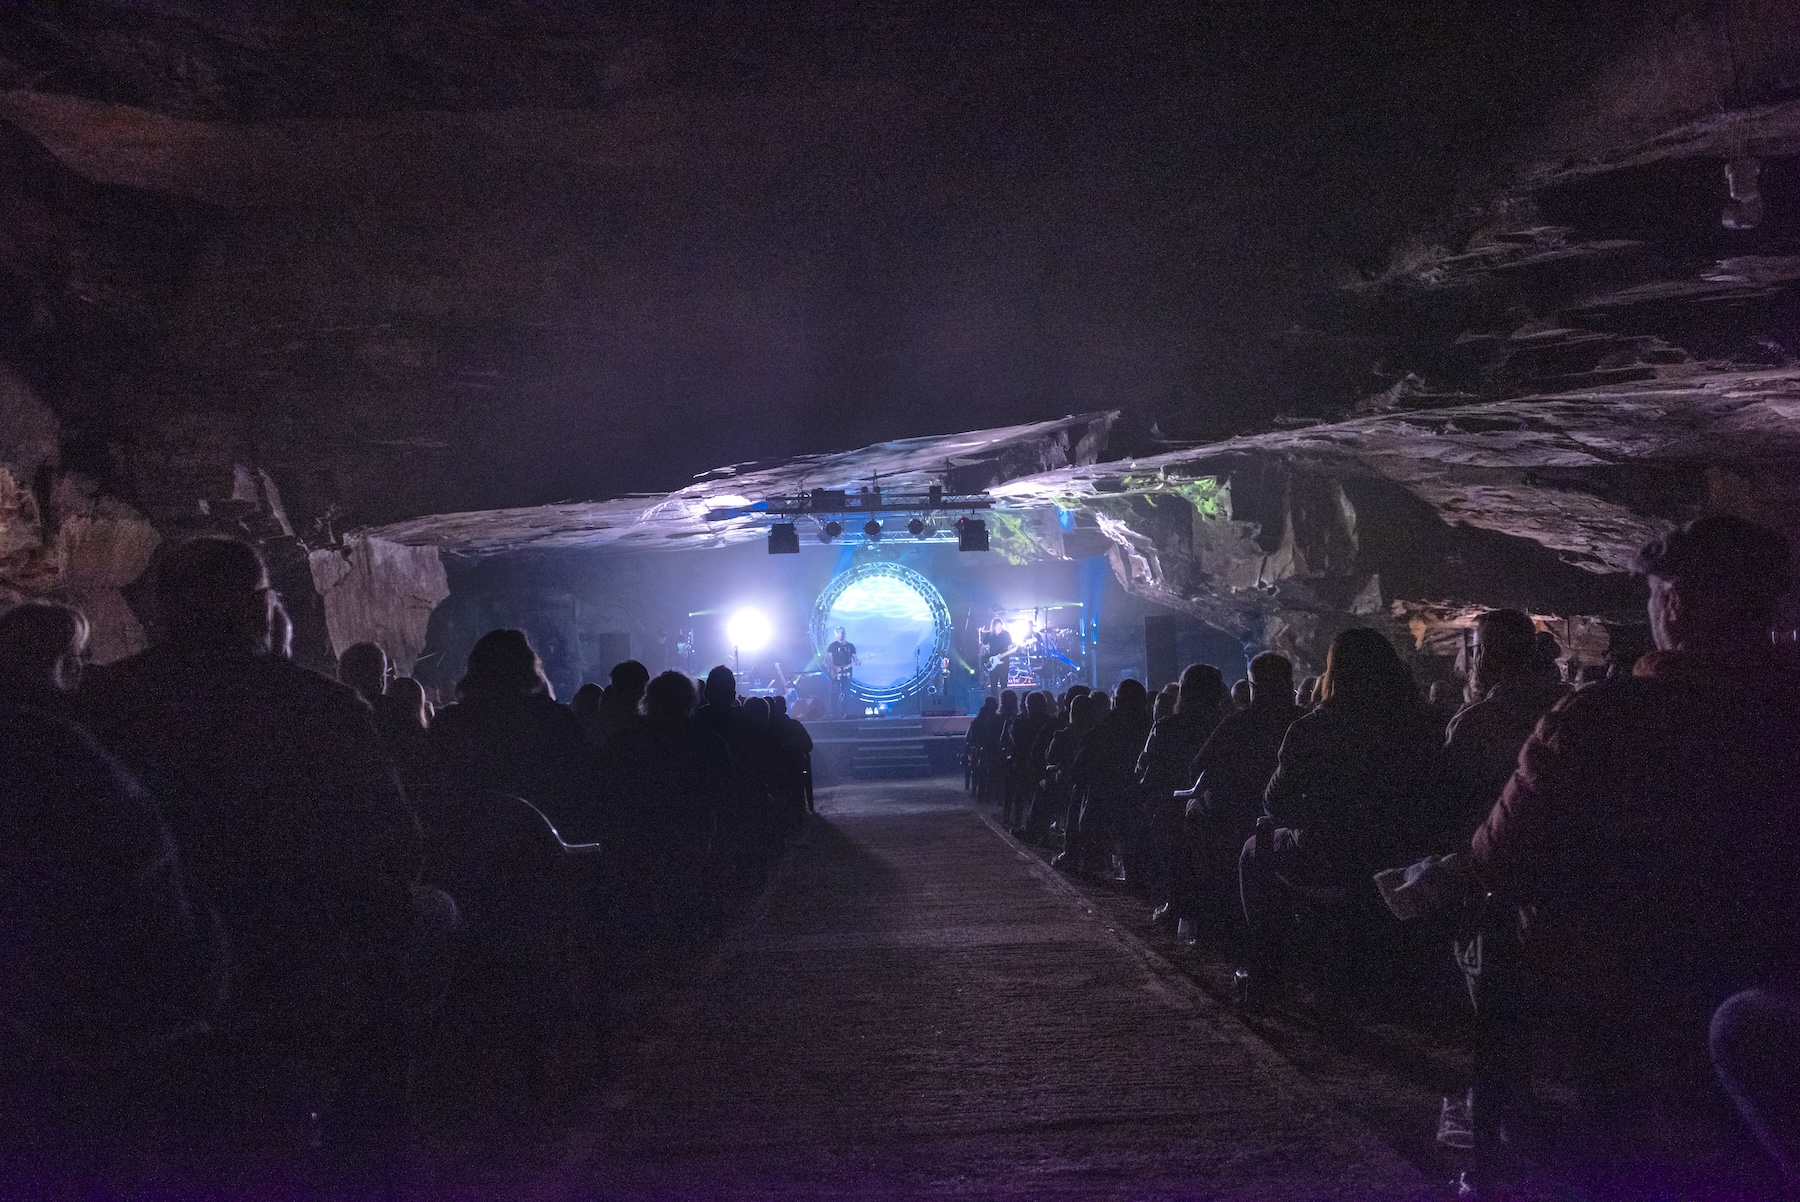 Inside Carnglaze Caverns